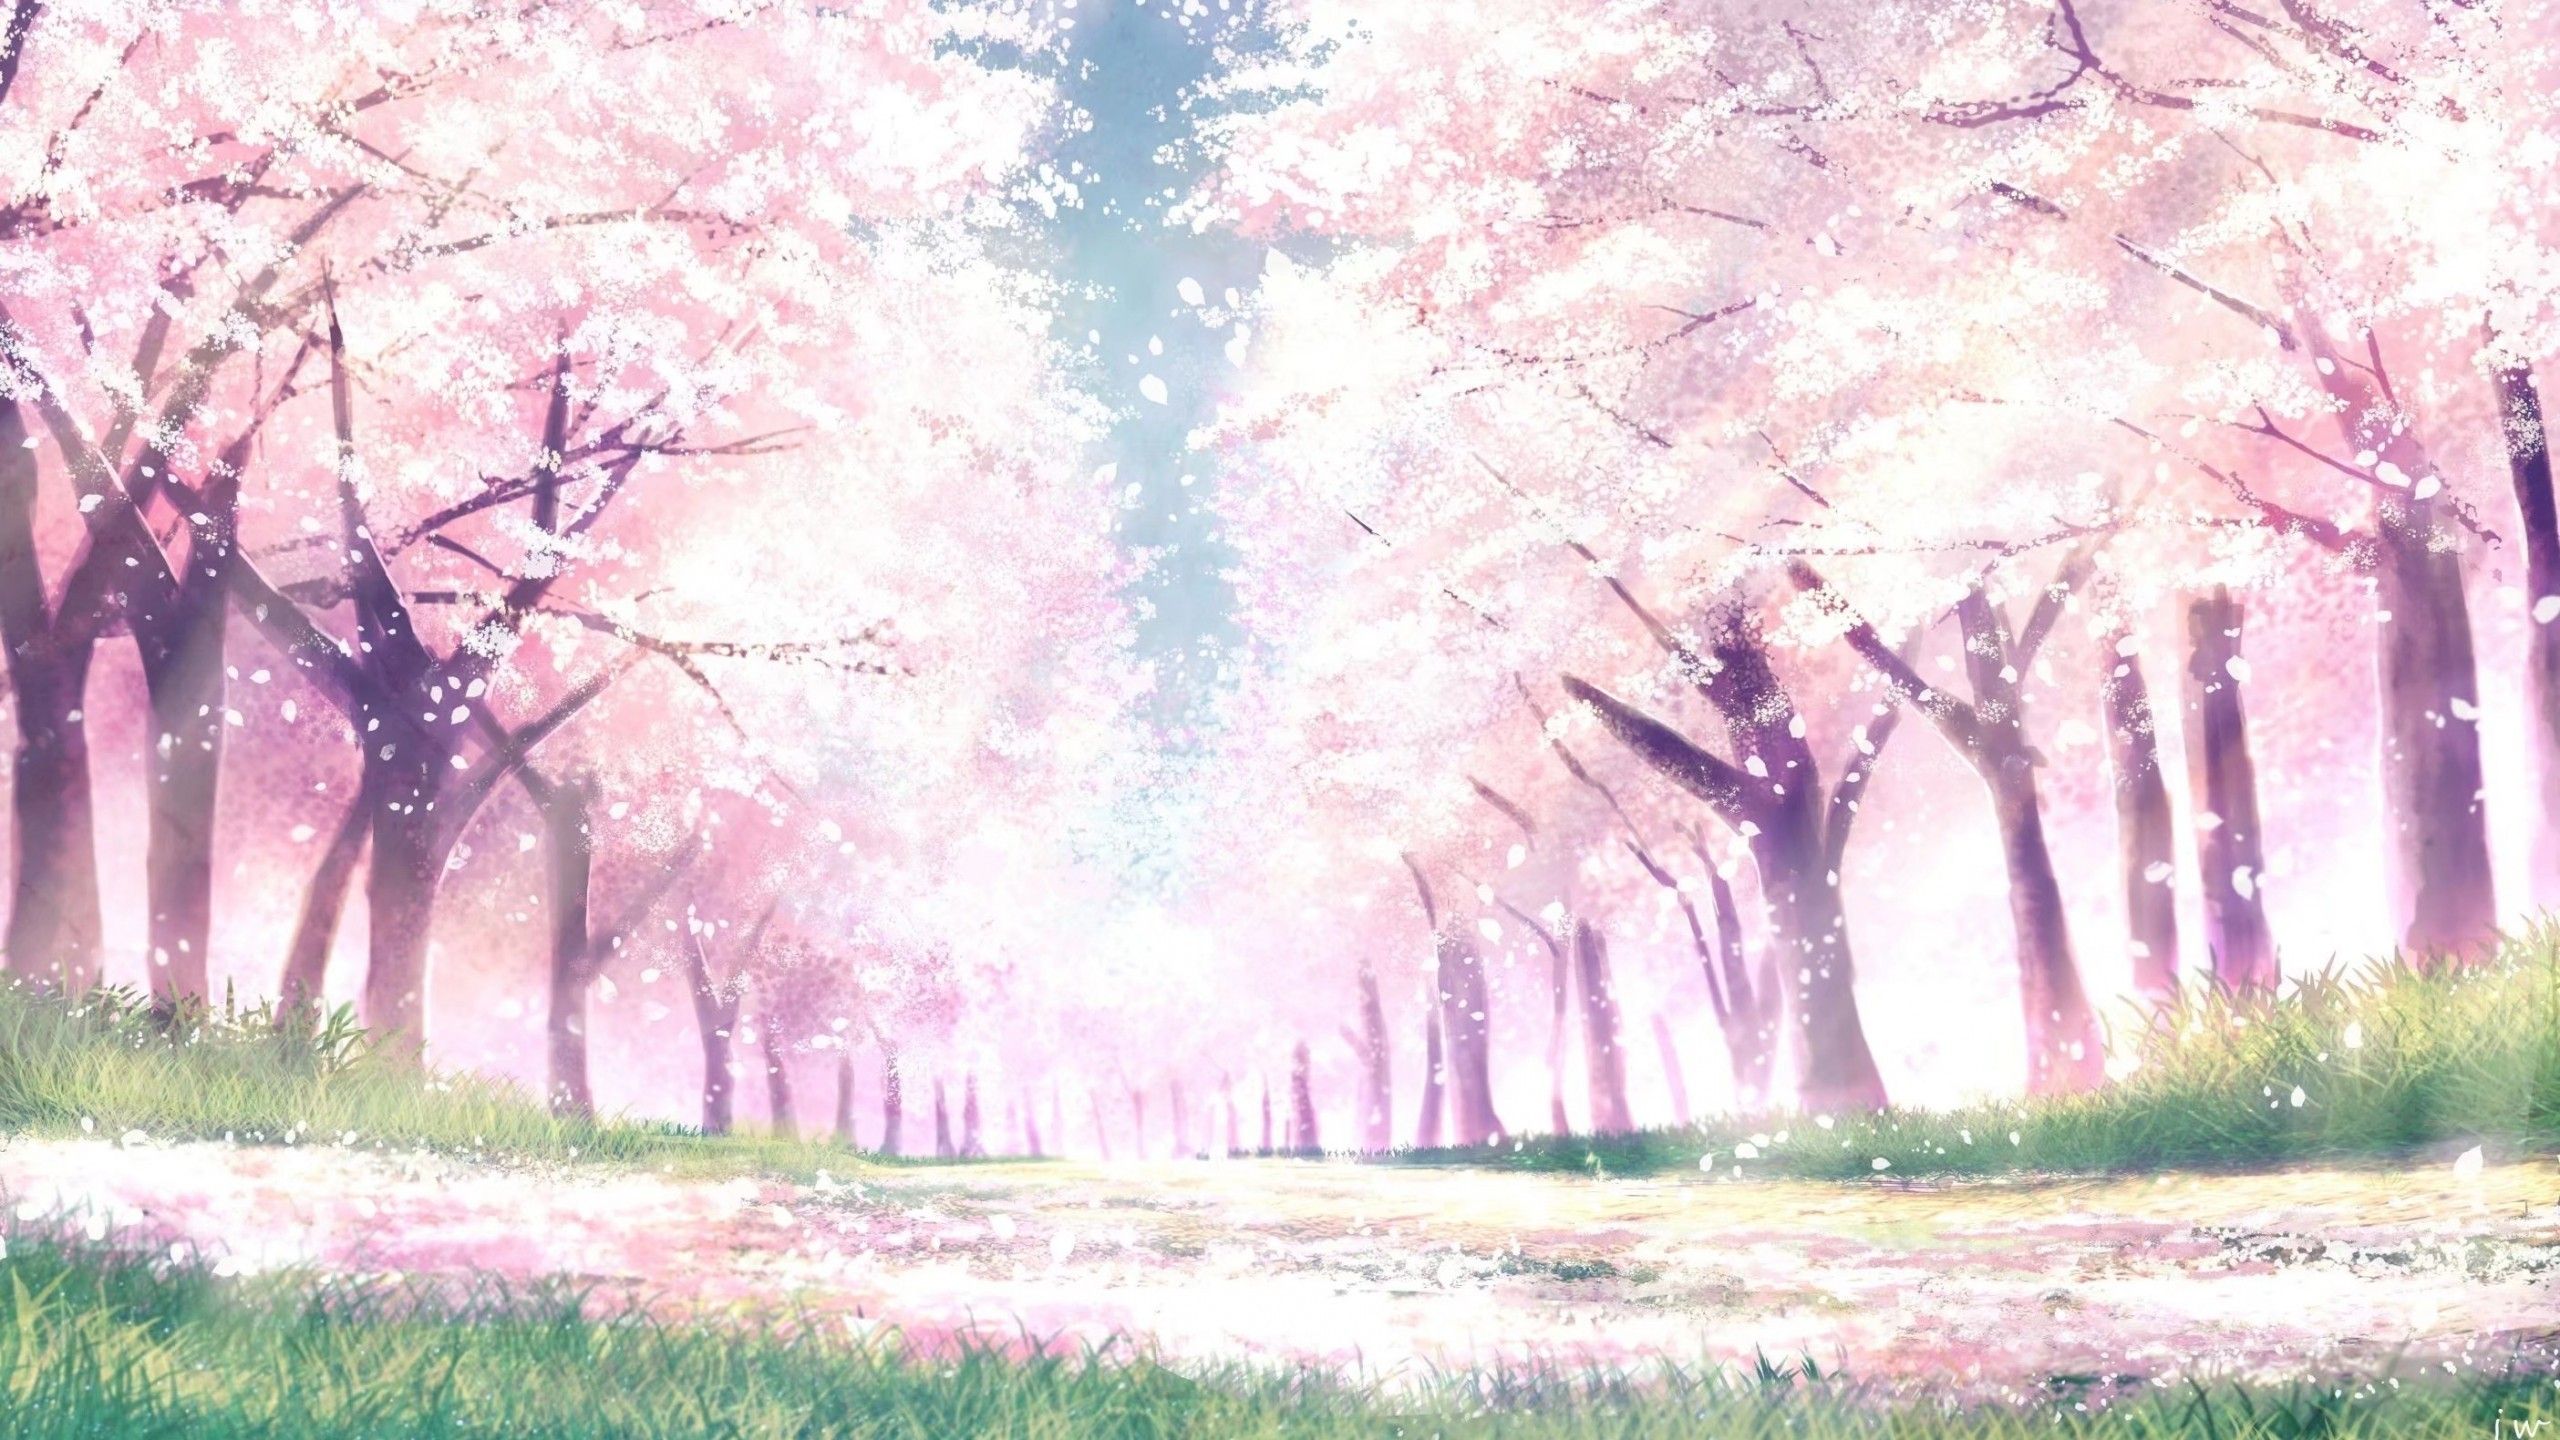 Download 2560x1440 Anime Landscape, Spring, Cherry Blossom, Sakura Bloom, Trees, Path Wallpaper for iMac 27 inch